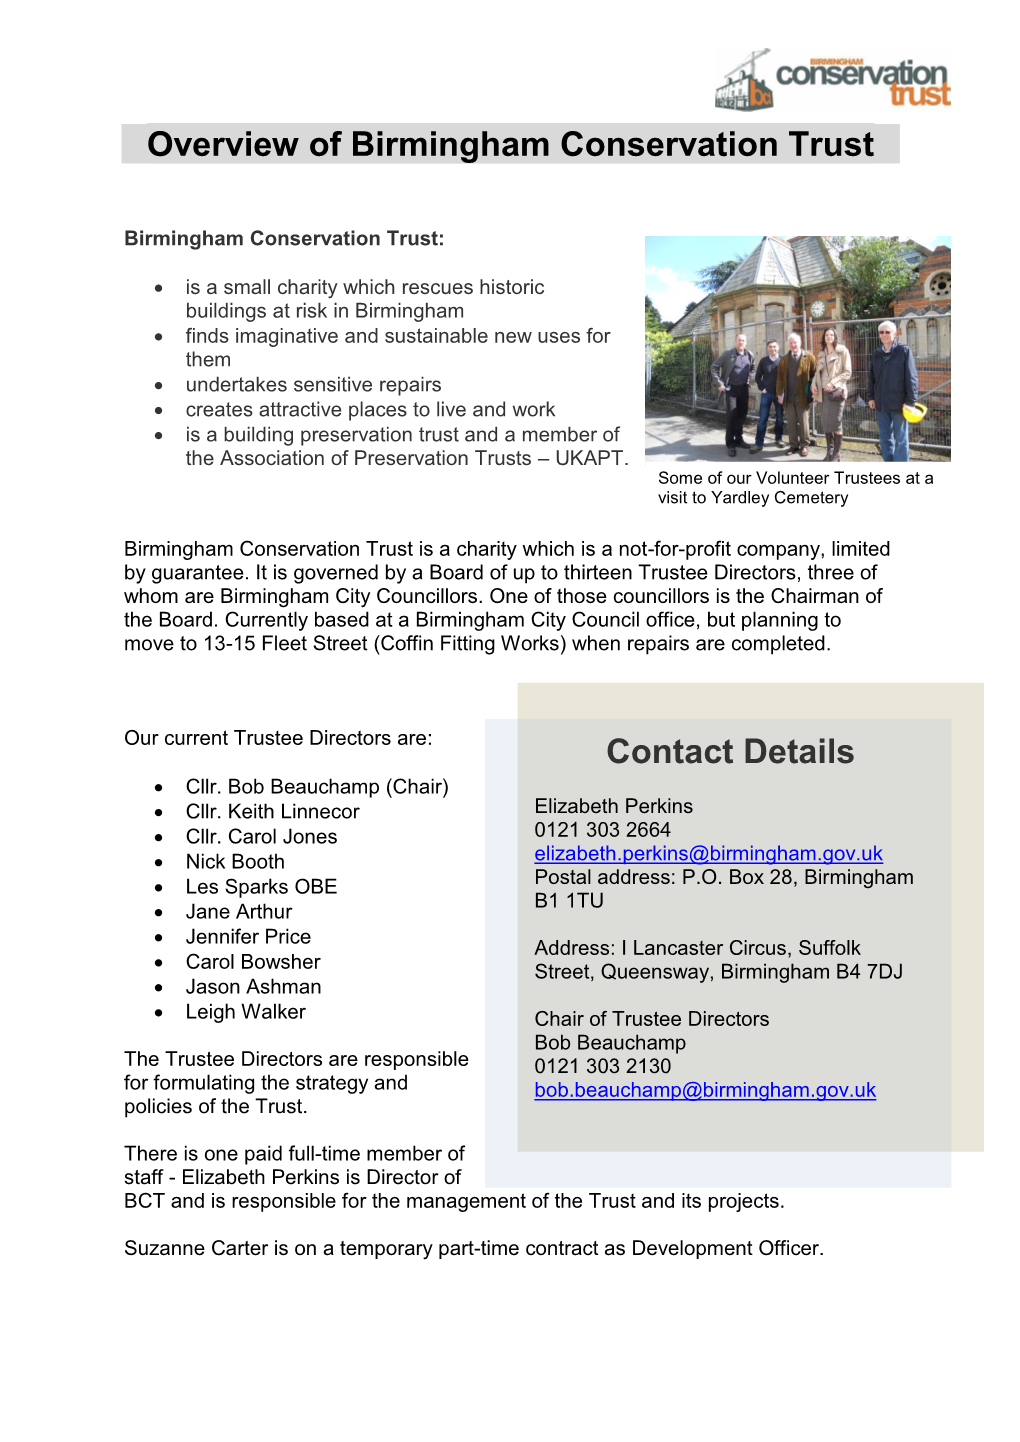 Overview of Birmingham Conservation Trust Contact Details